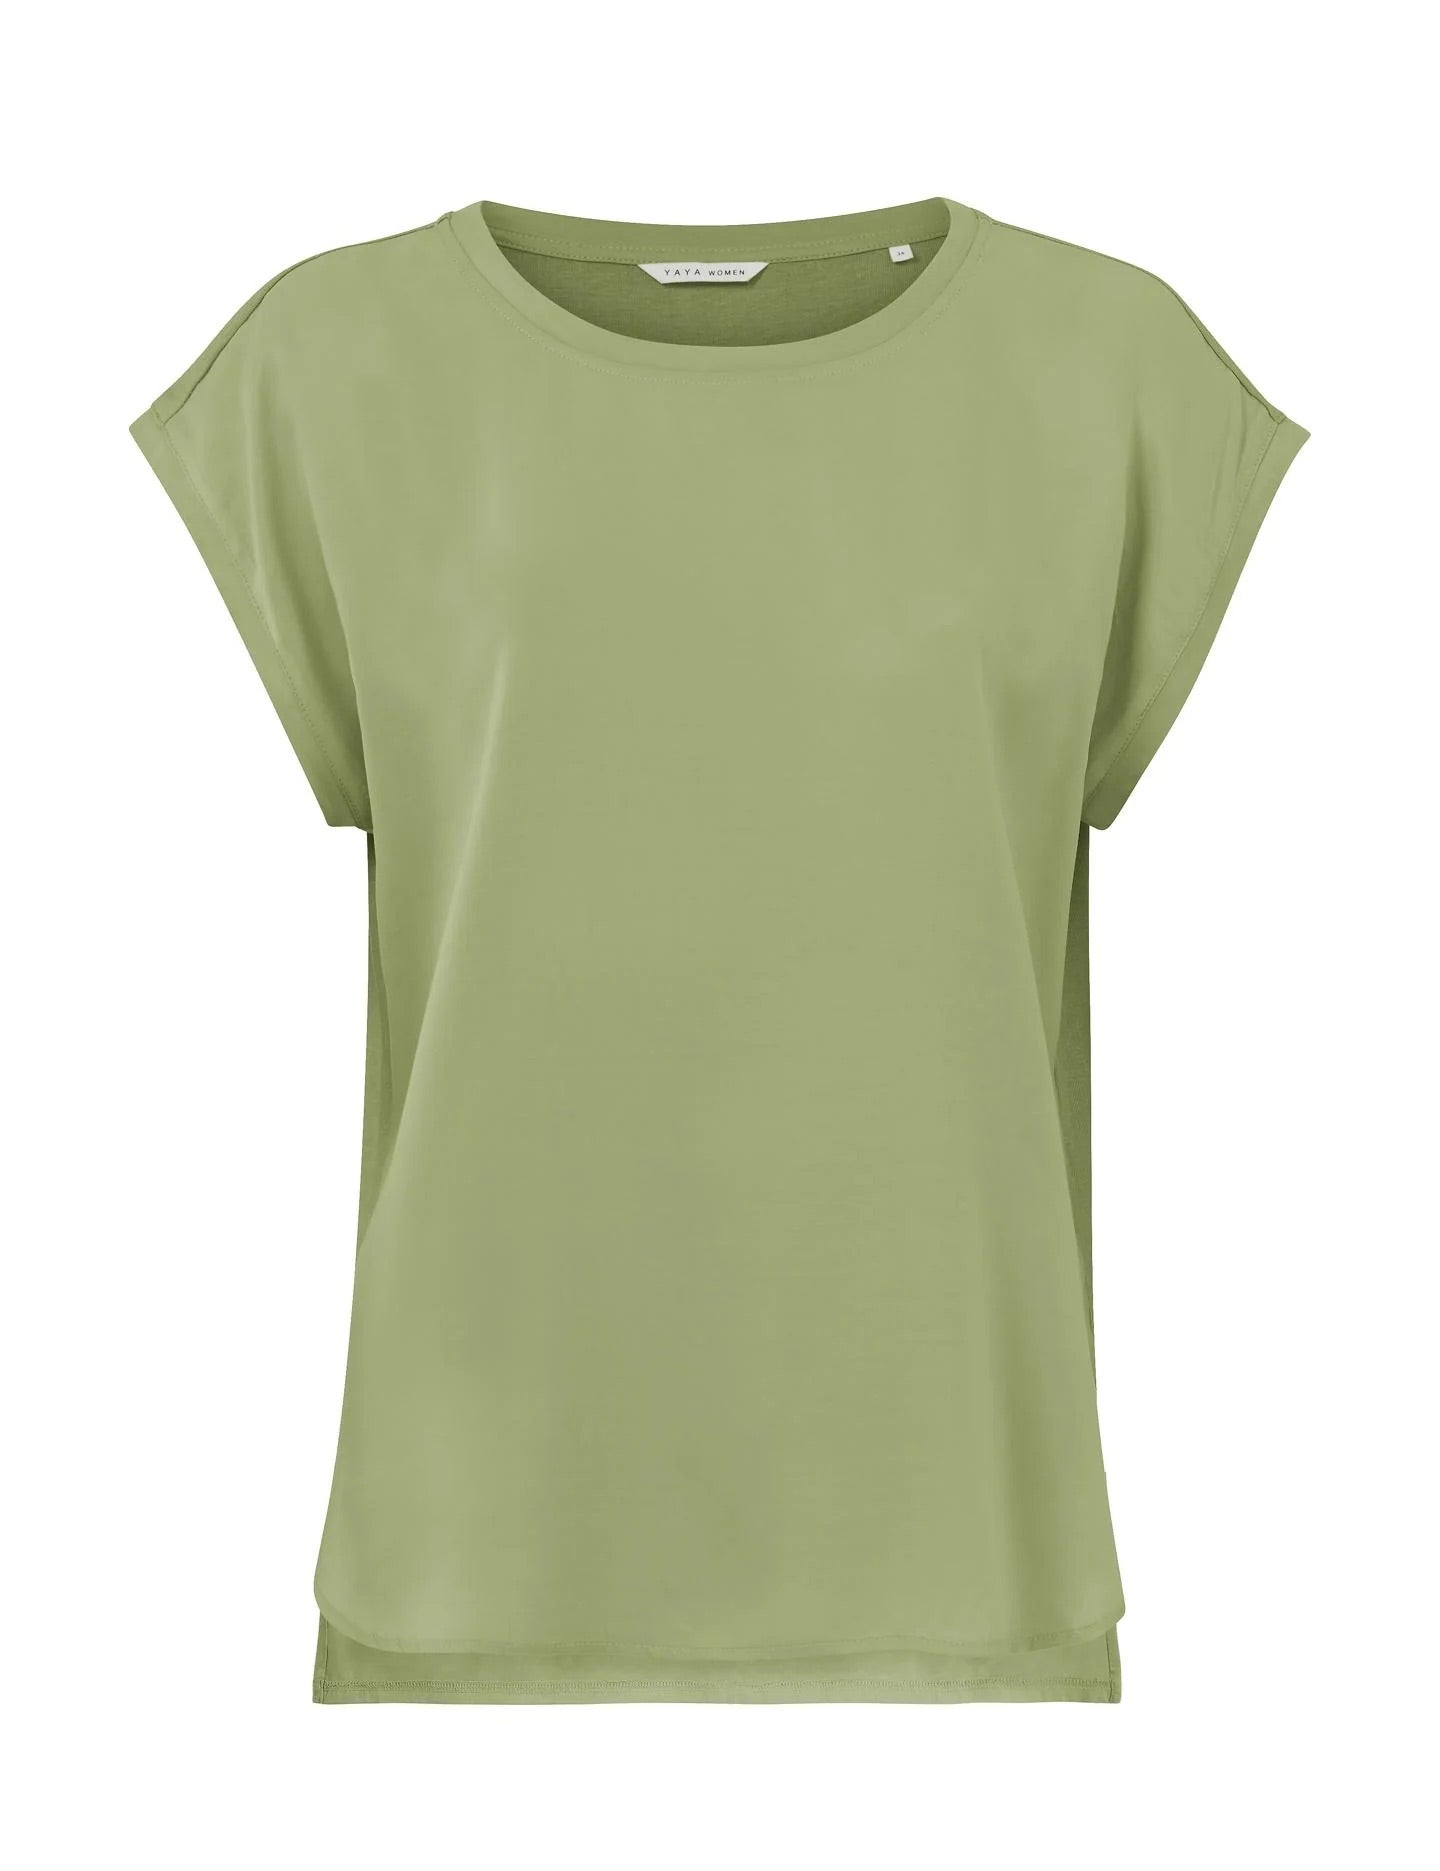 sleeveless-top-with-round-neck-in-fabric-mix-sage-green_2d8785fc-8f19-4ec6-843f-30fcef4fb391_2880x_jpg.jpg